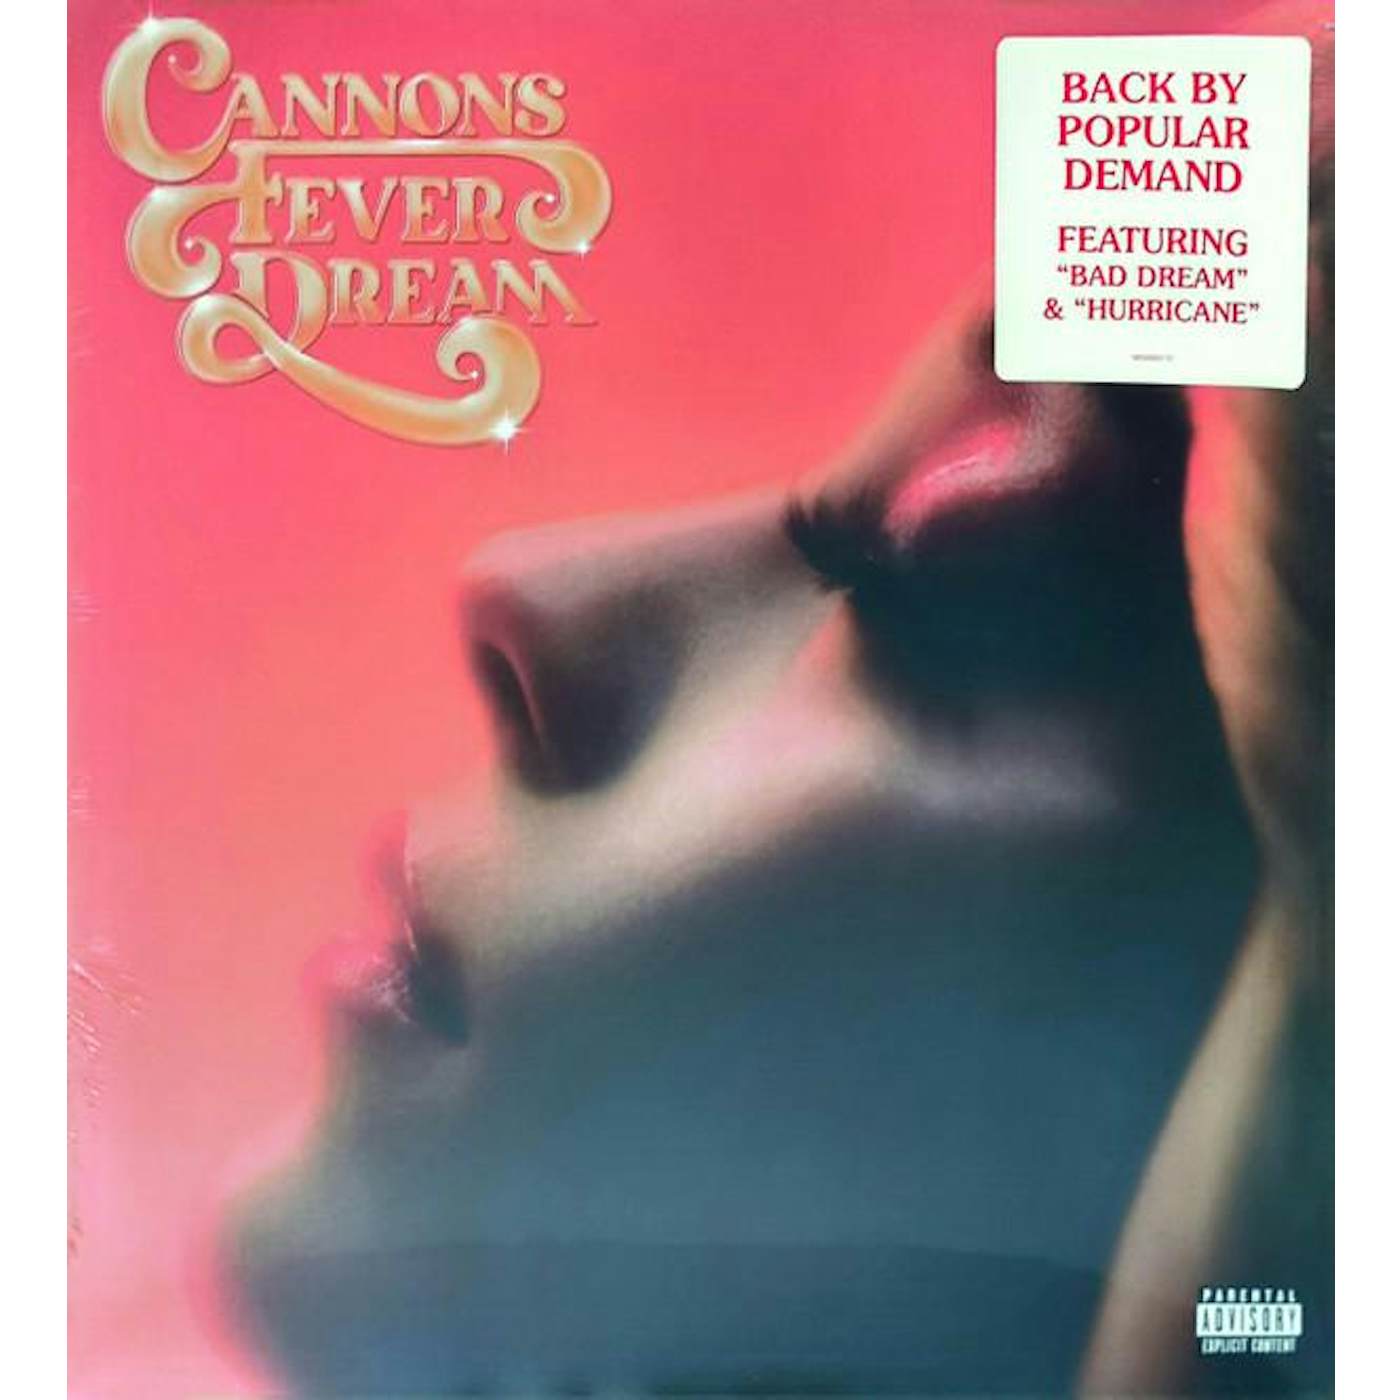 Cannons FEVER DREAM (X) Vinyl Record